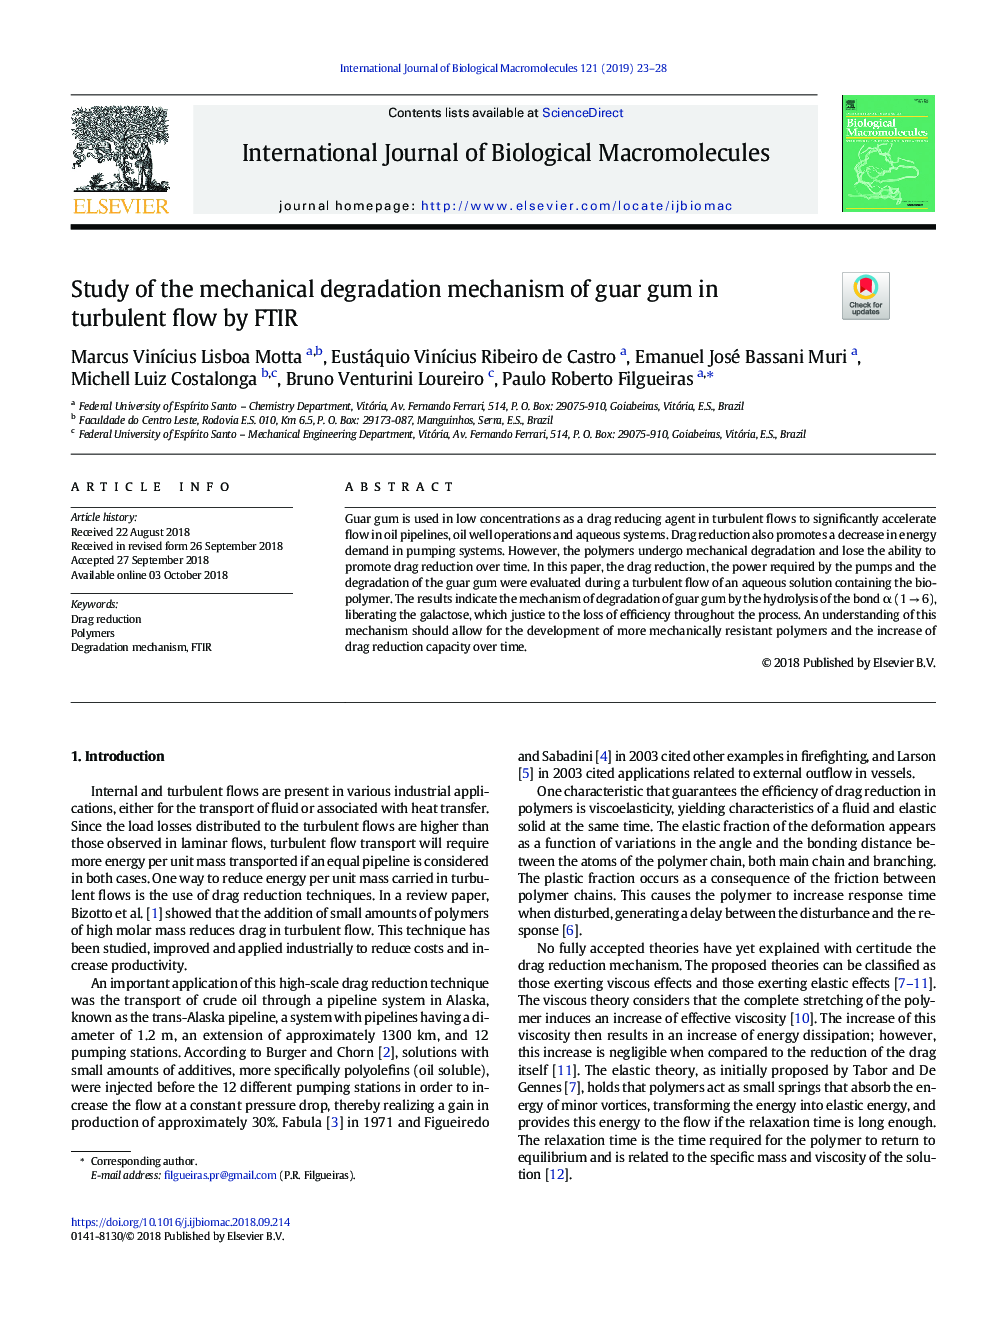 Study of the mechanical degradation mechanism of guar gum in turbulent flow by FTIR